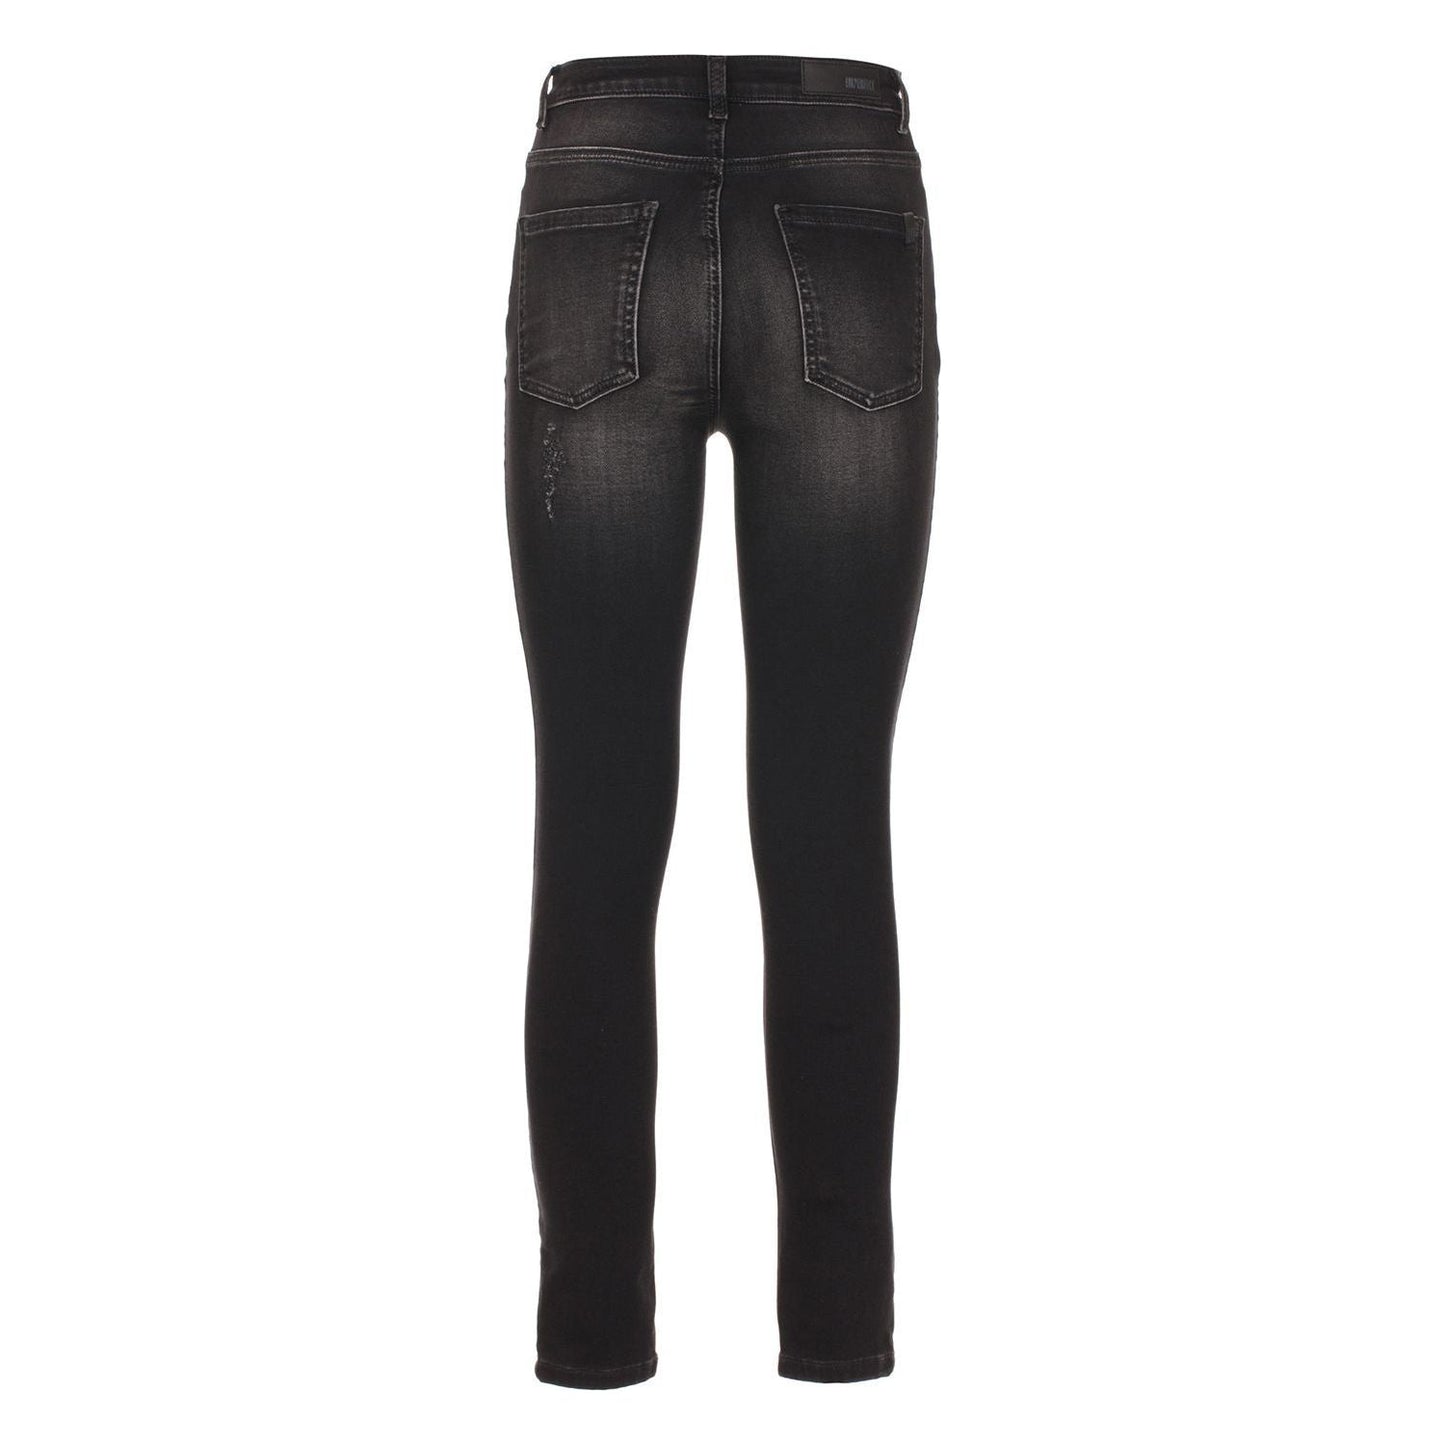 Imperfect Sleek Black Cotton-Blend Sweat Pants iwwpf-imperfect-jeans-pant-2 Jeans & Pants stock_product_image_1621_1118781570-9a116f89-7a8.jpg